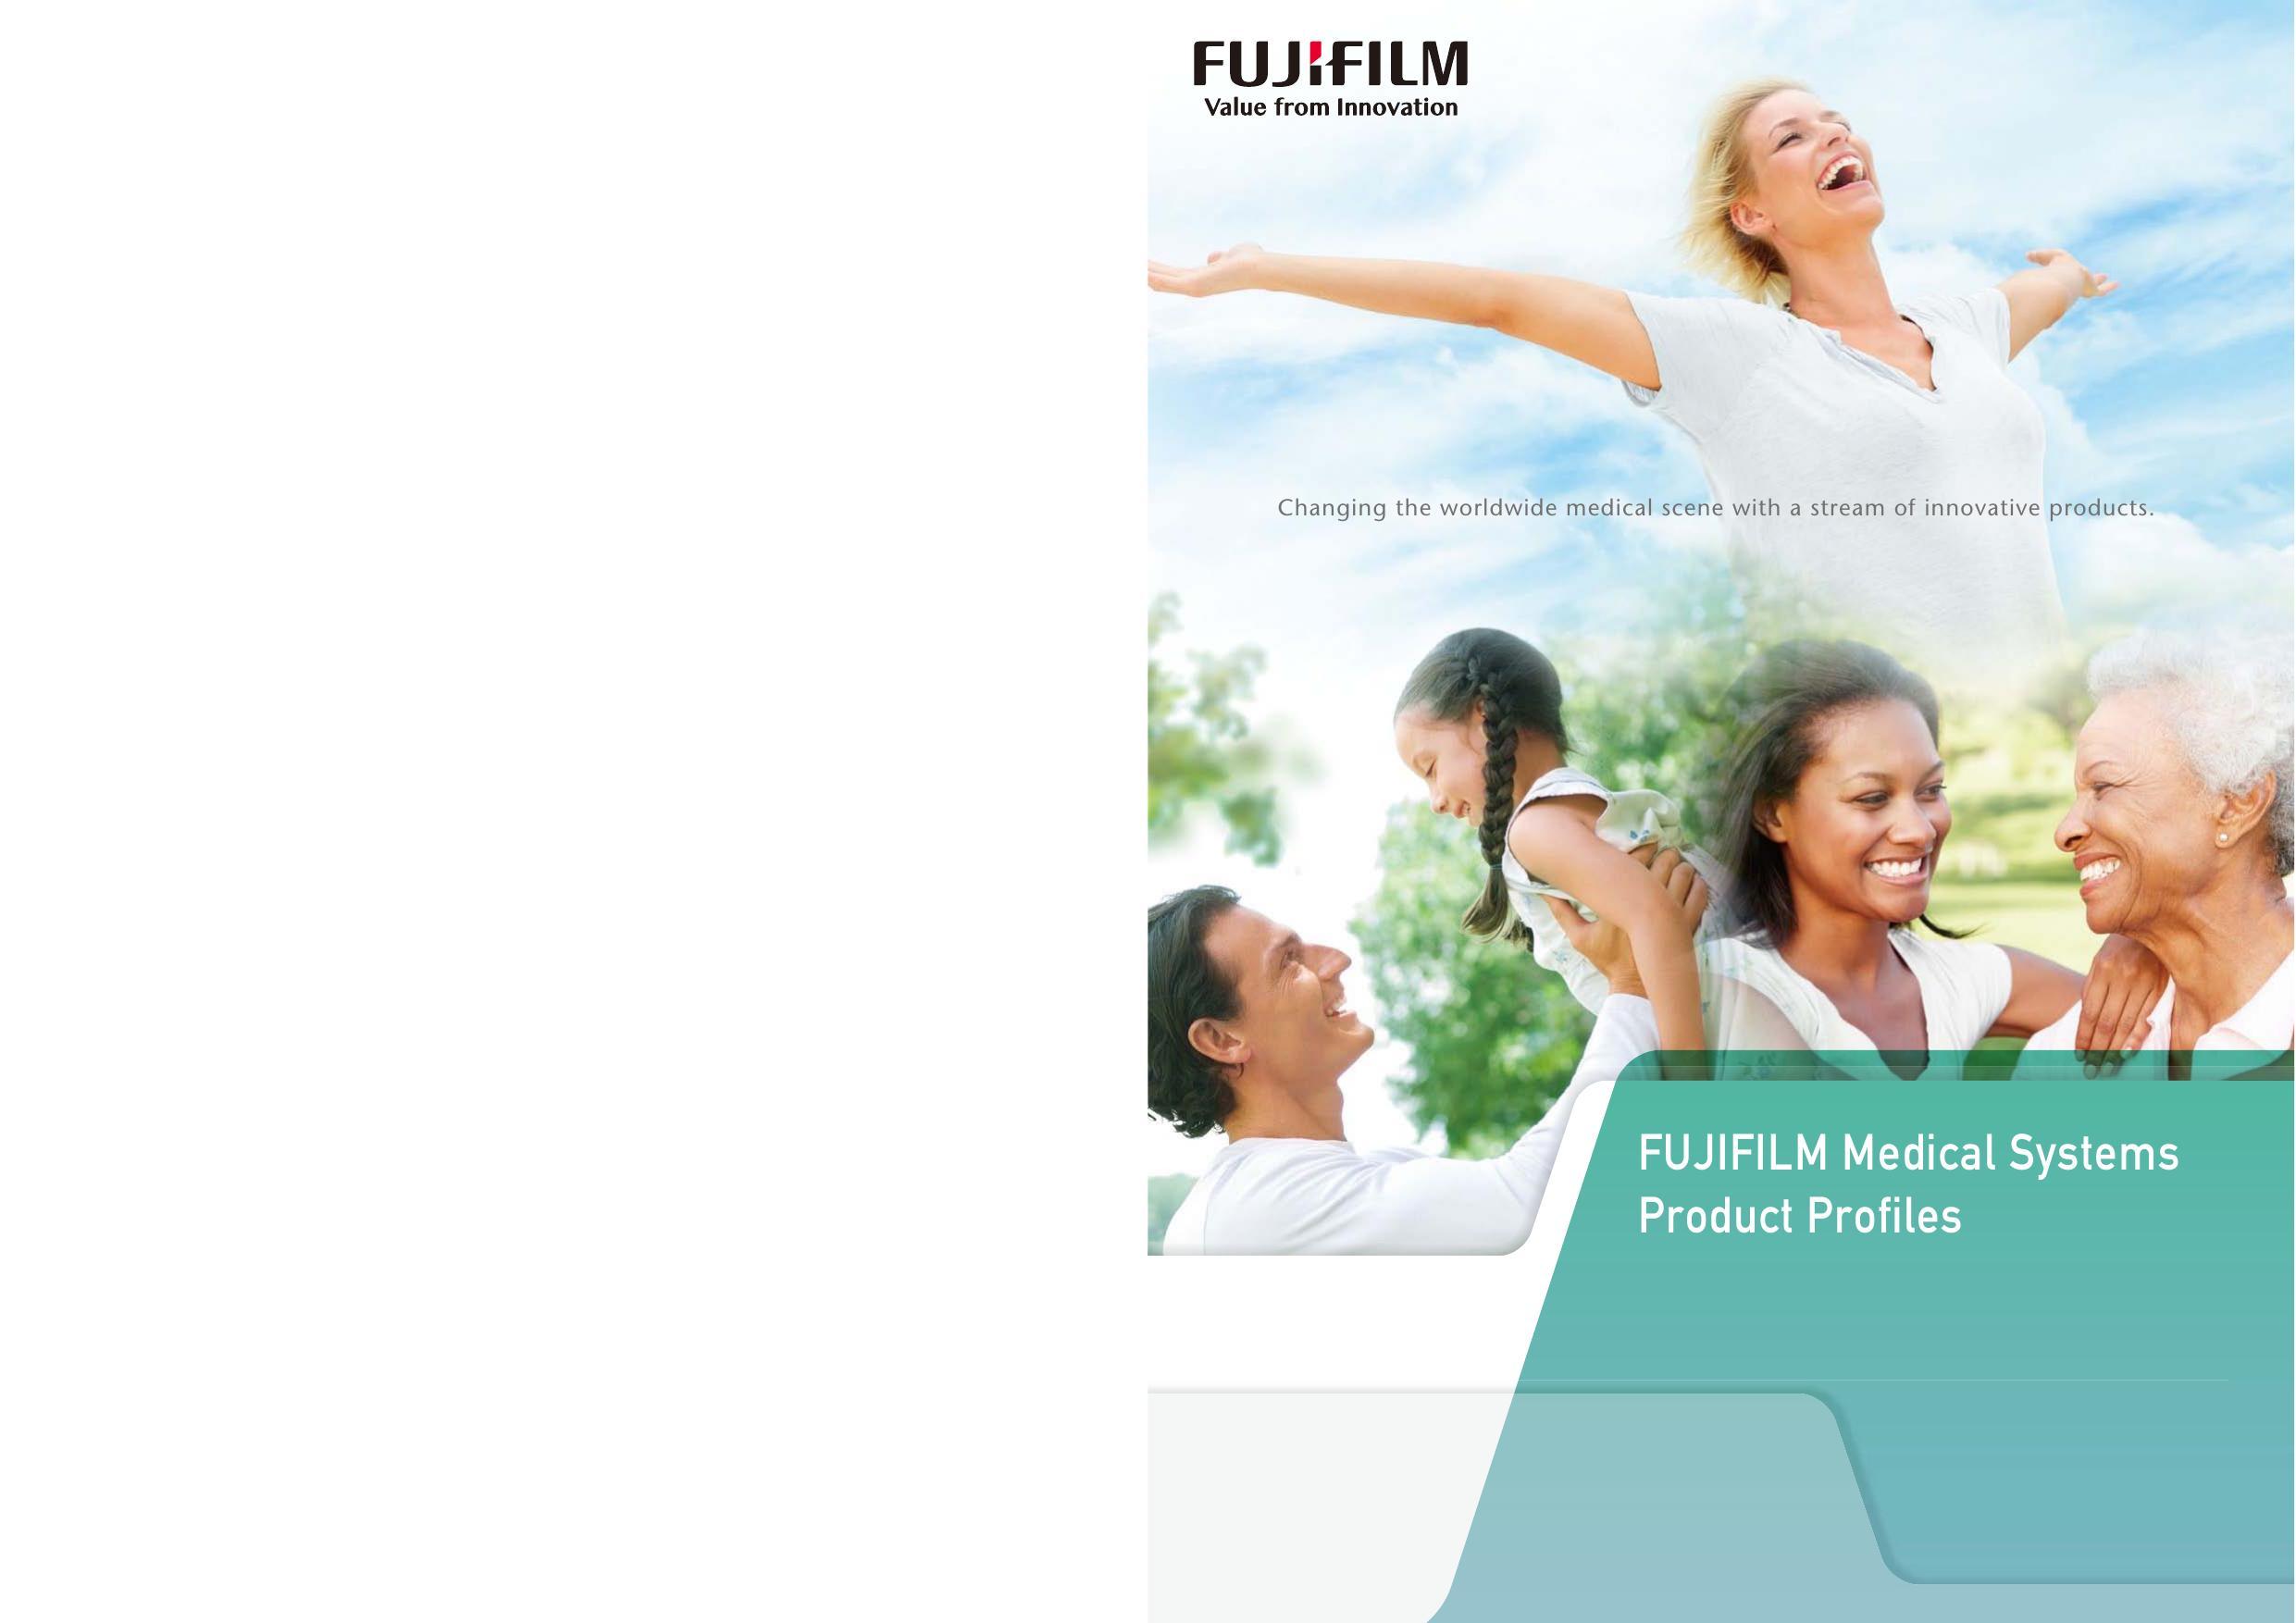 fujifilm-digital-radiography-systems-fdr-user-manual.pdf